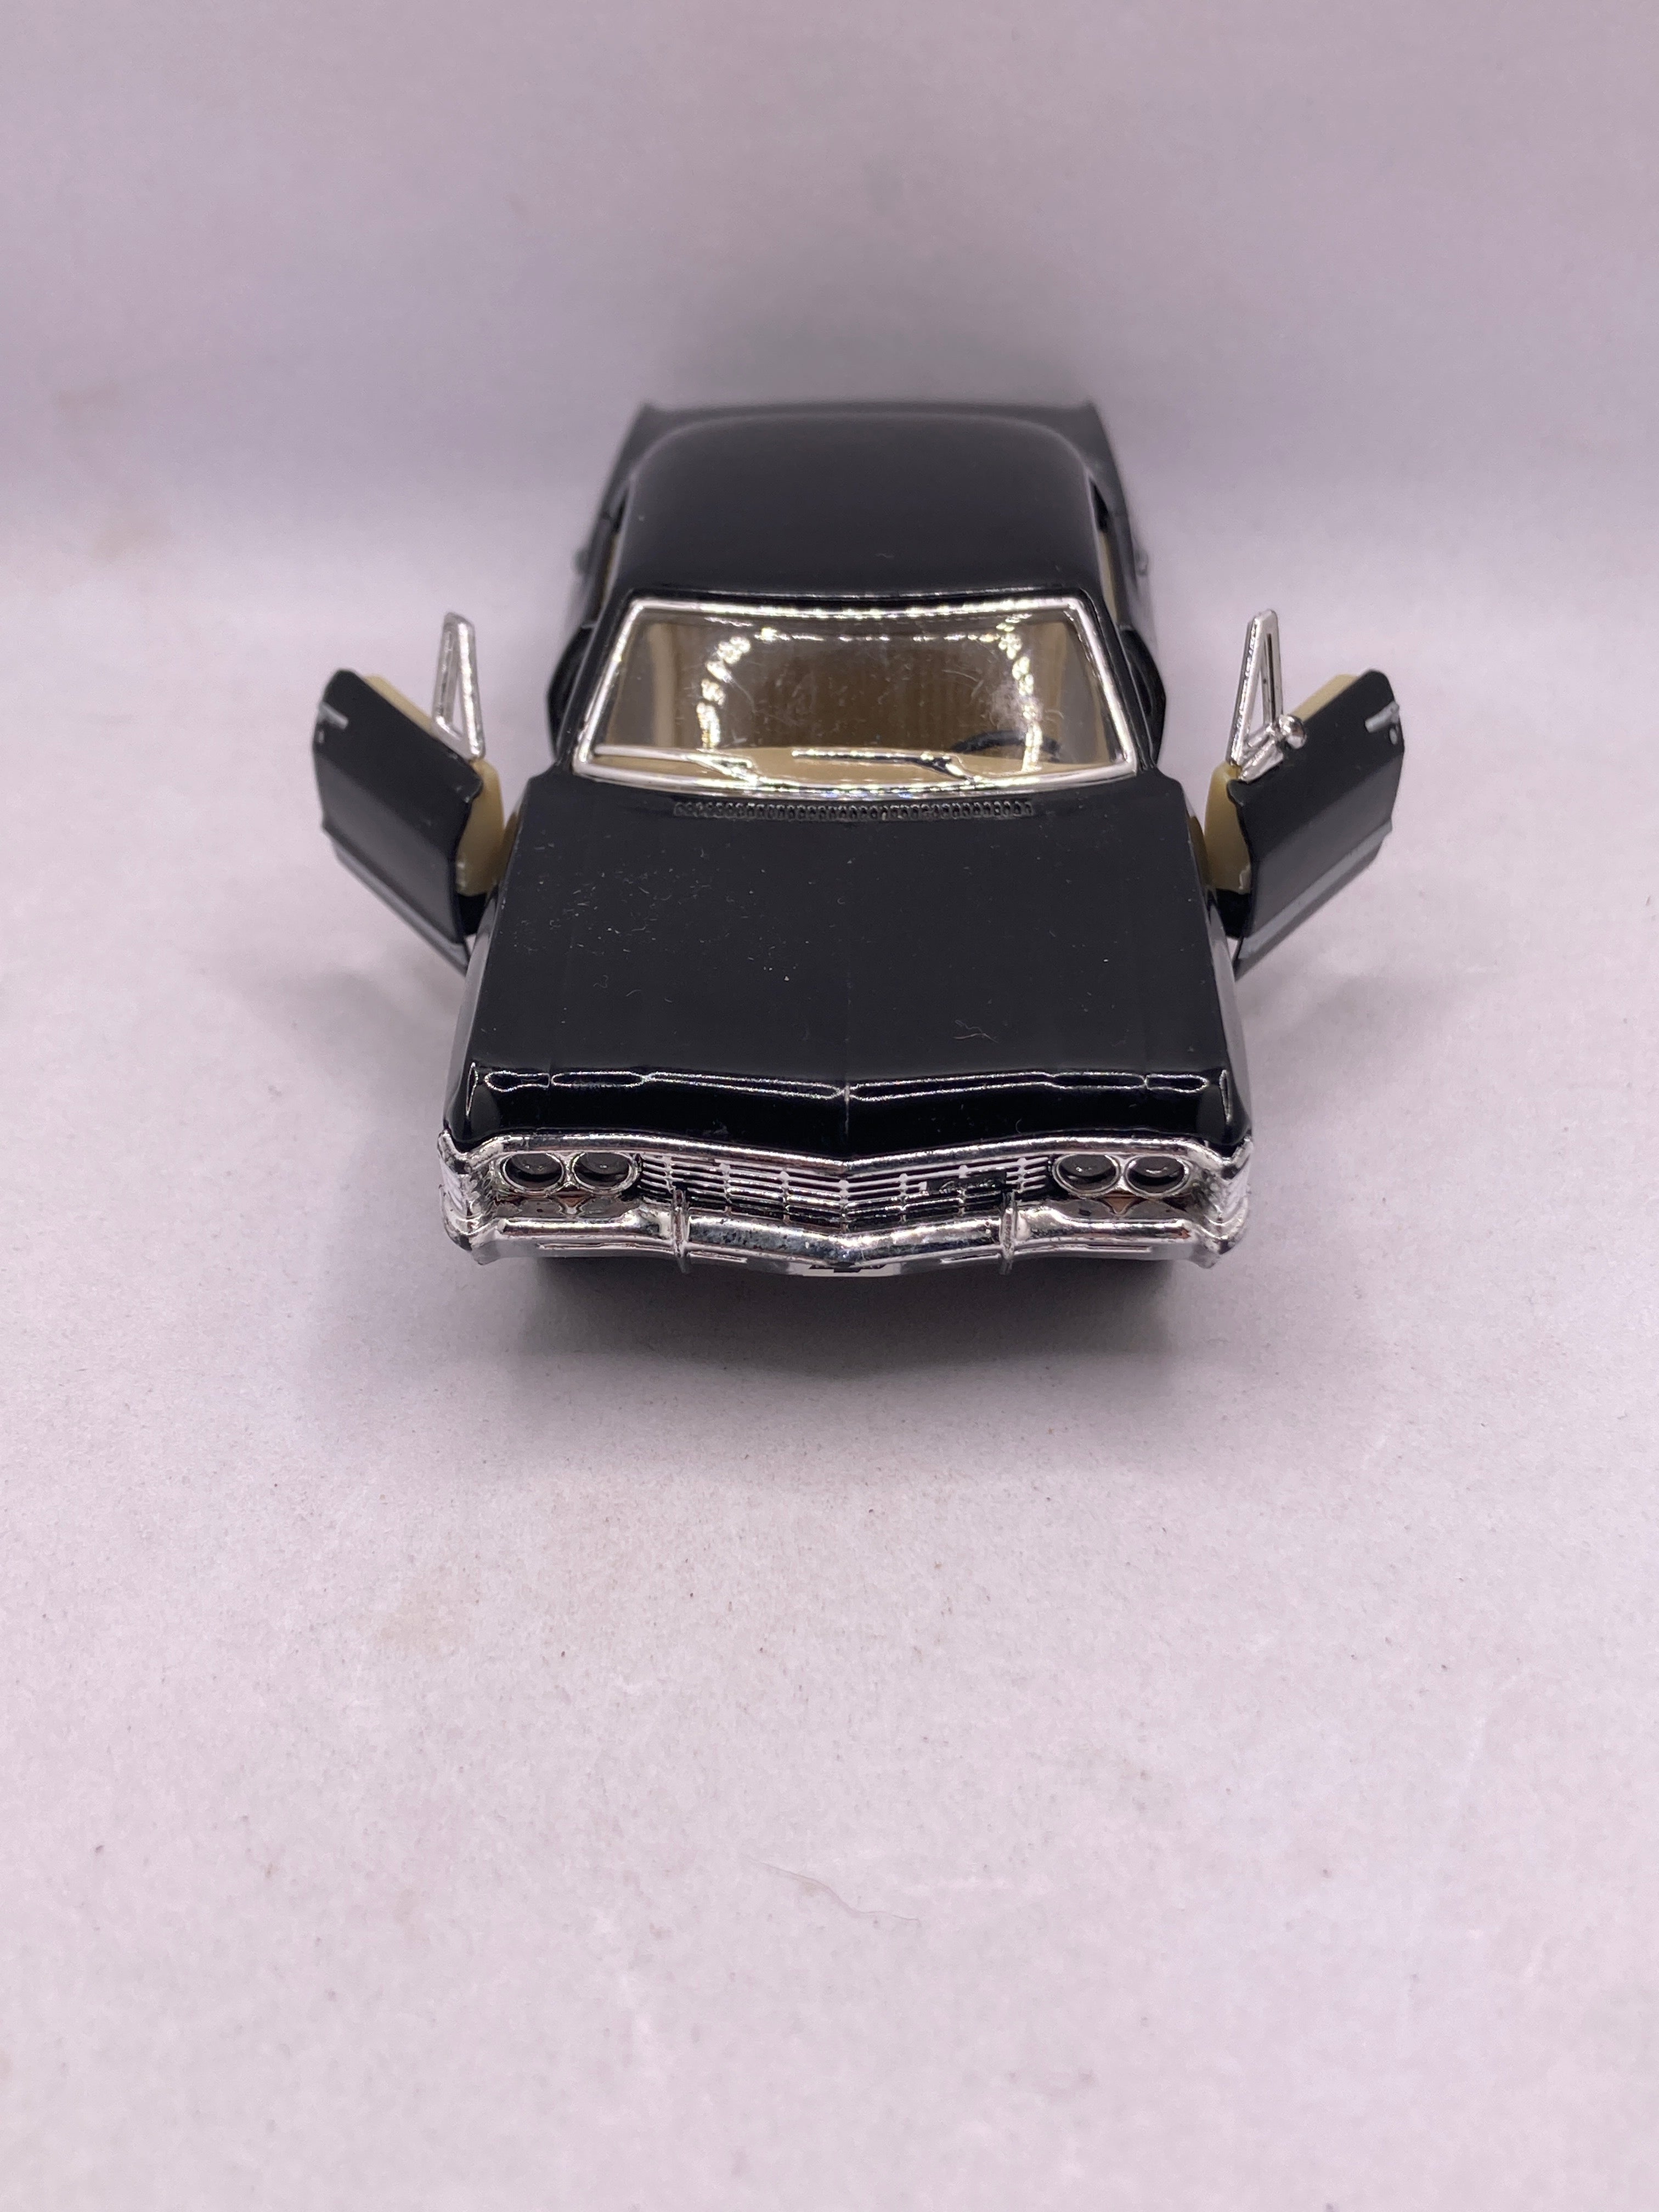 Kinsmart 1967 Chevrolet Impala Diecast